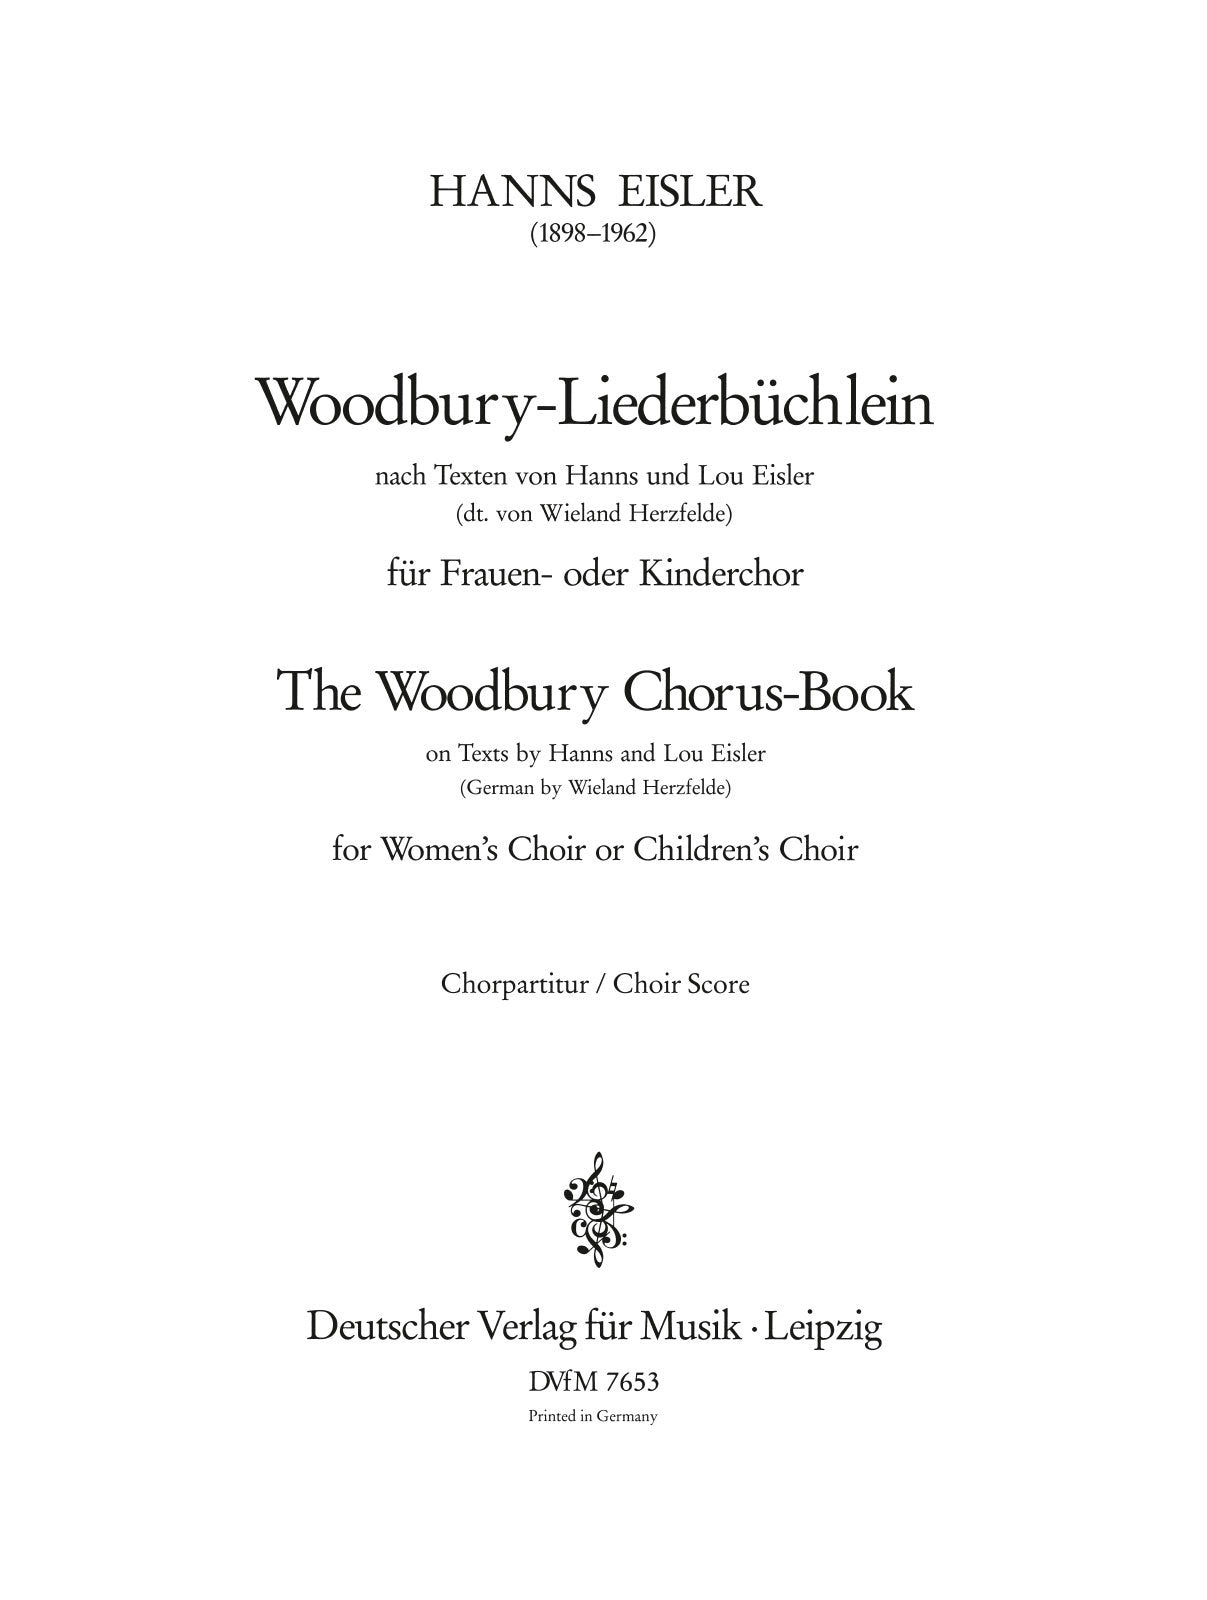 Eisler: The Woodbury Chorus-Book